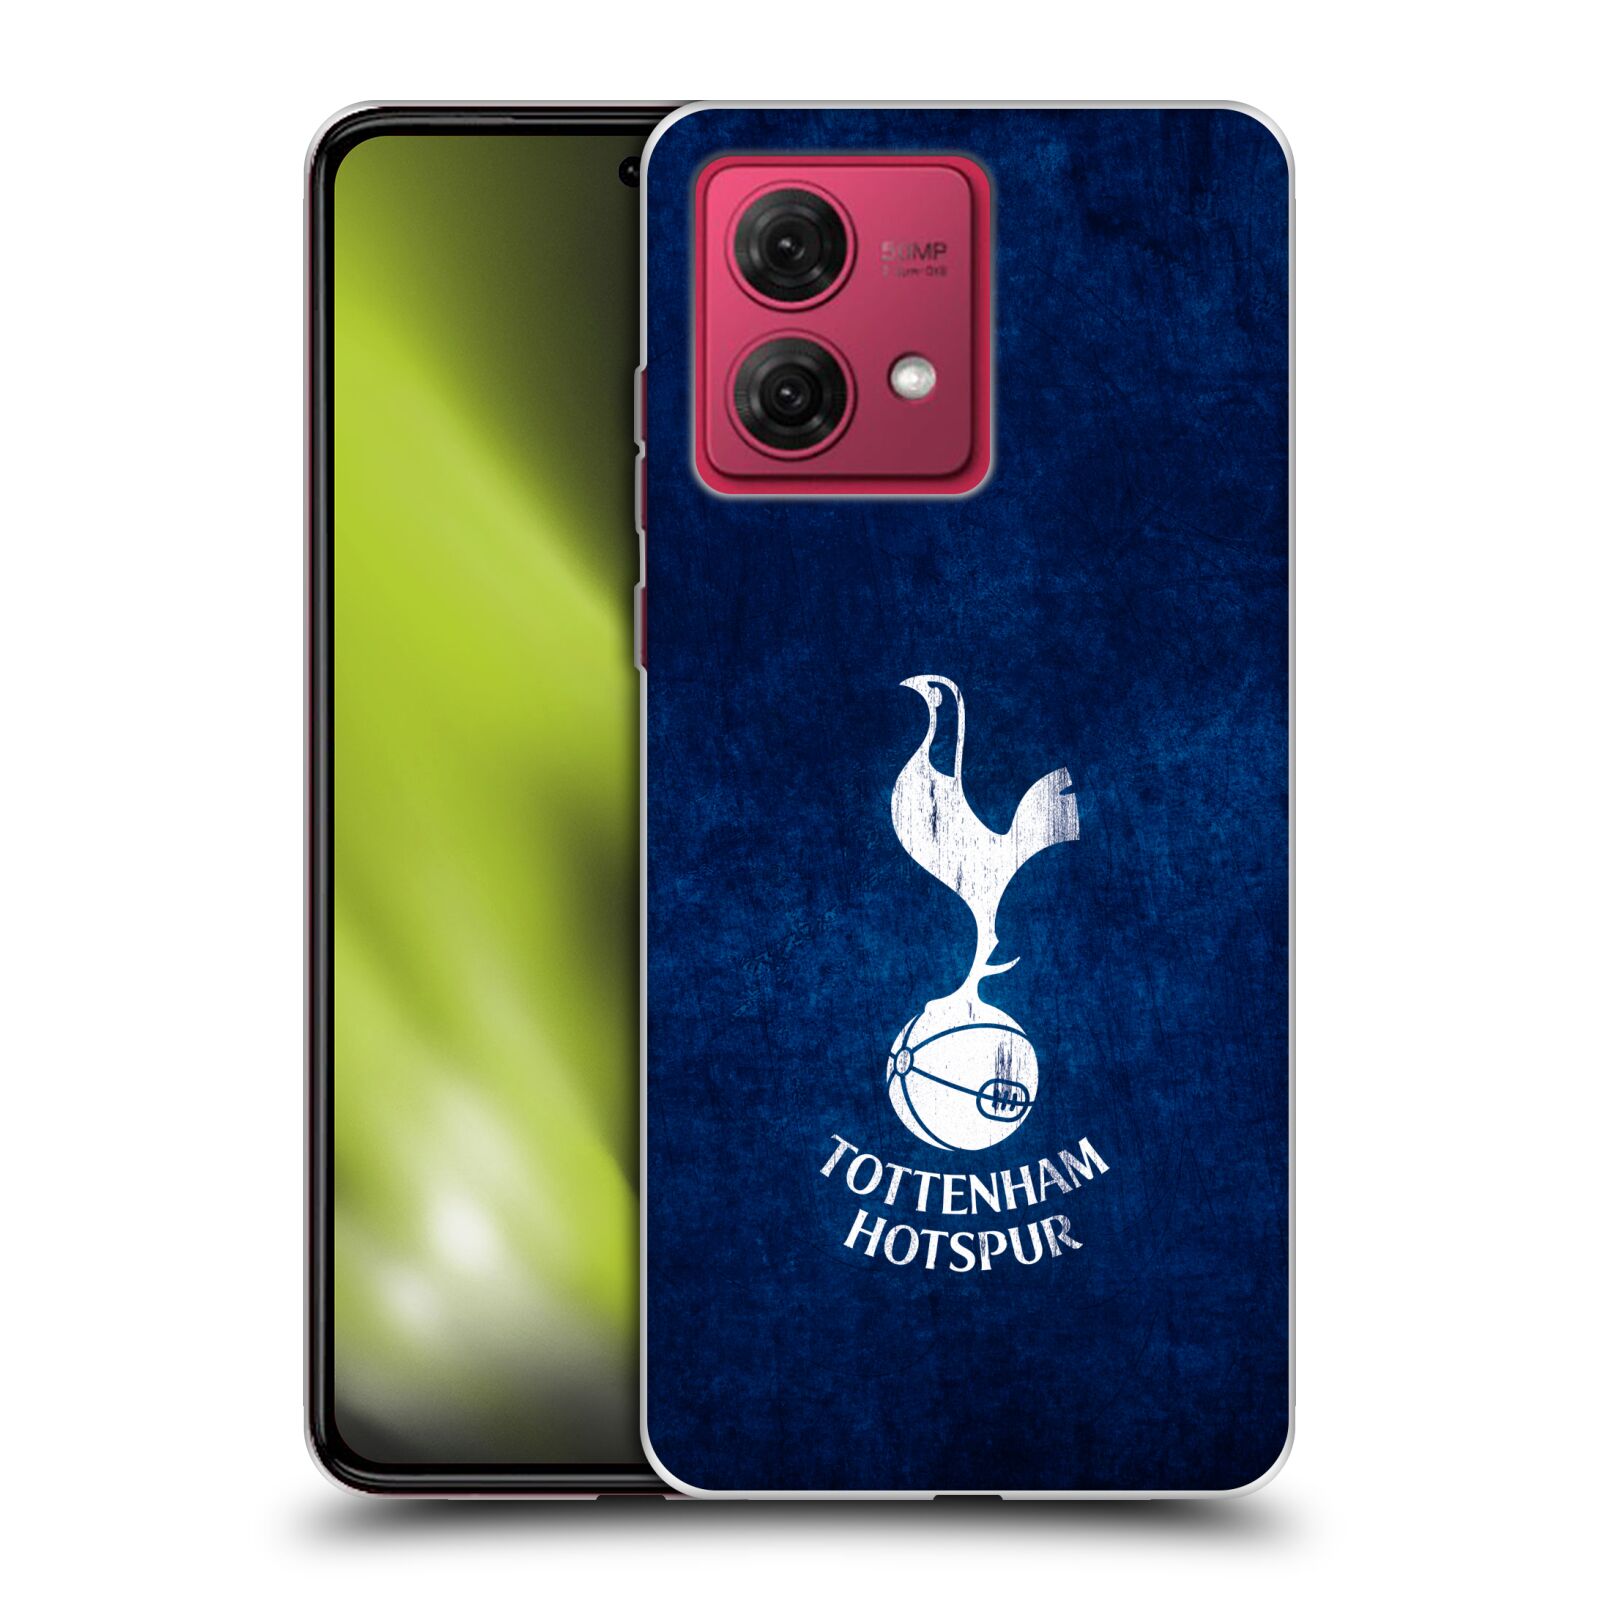 Silikonové pouzdro na mobil Motorola Moto G84 5G - Tottenham Hotspur F.C. (Silikonový kryt, obal, pouzdro na mobilní telefon Motorola Moto G84 5G s licencovaným motivem Tottenham Hotspur F.C.)